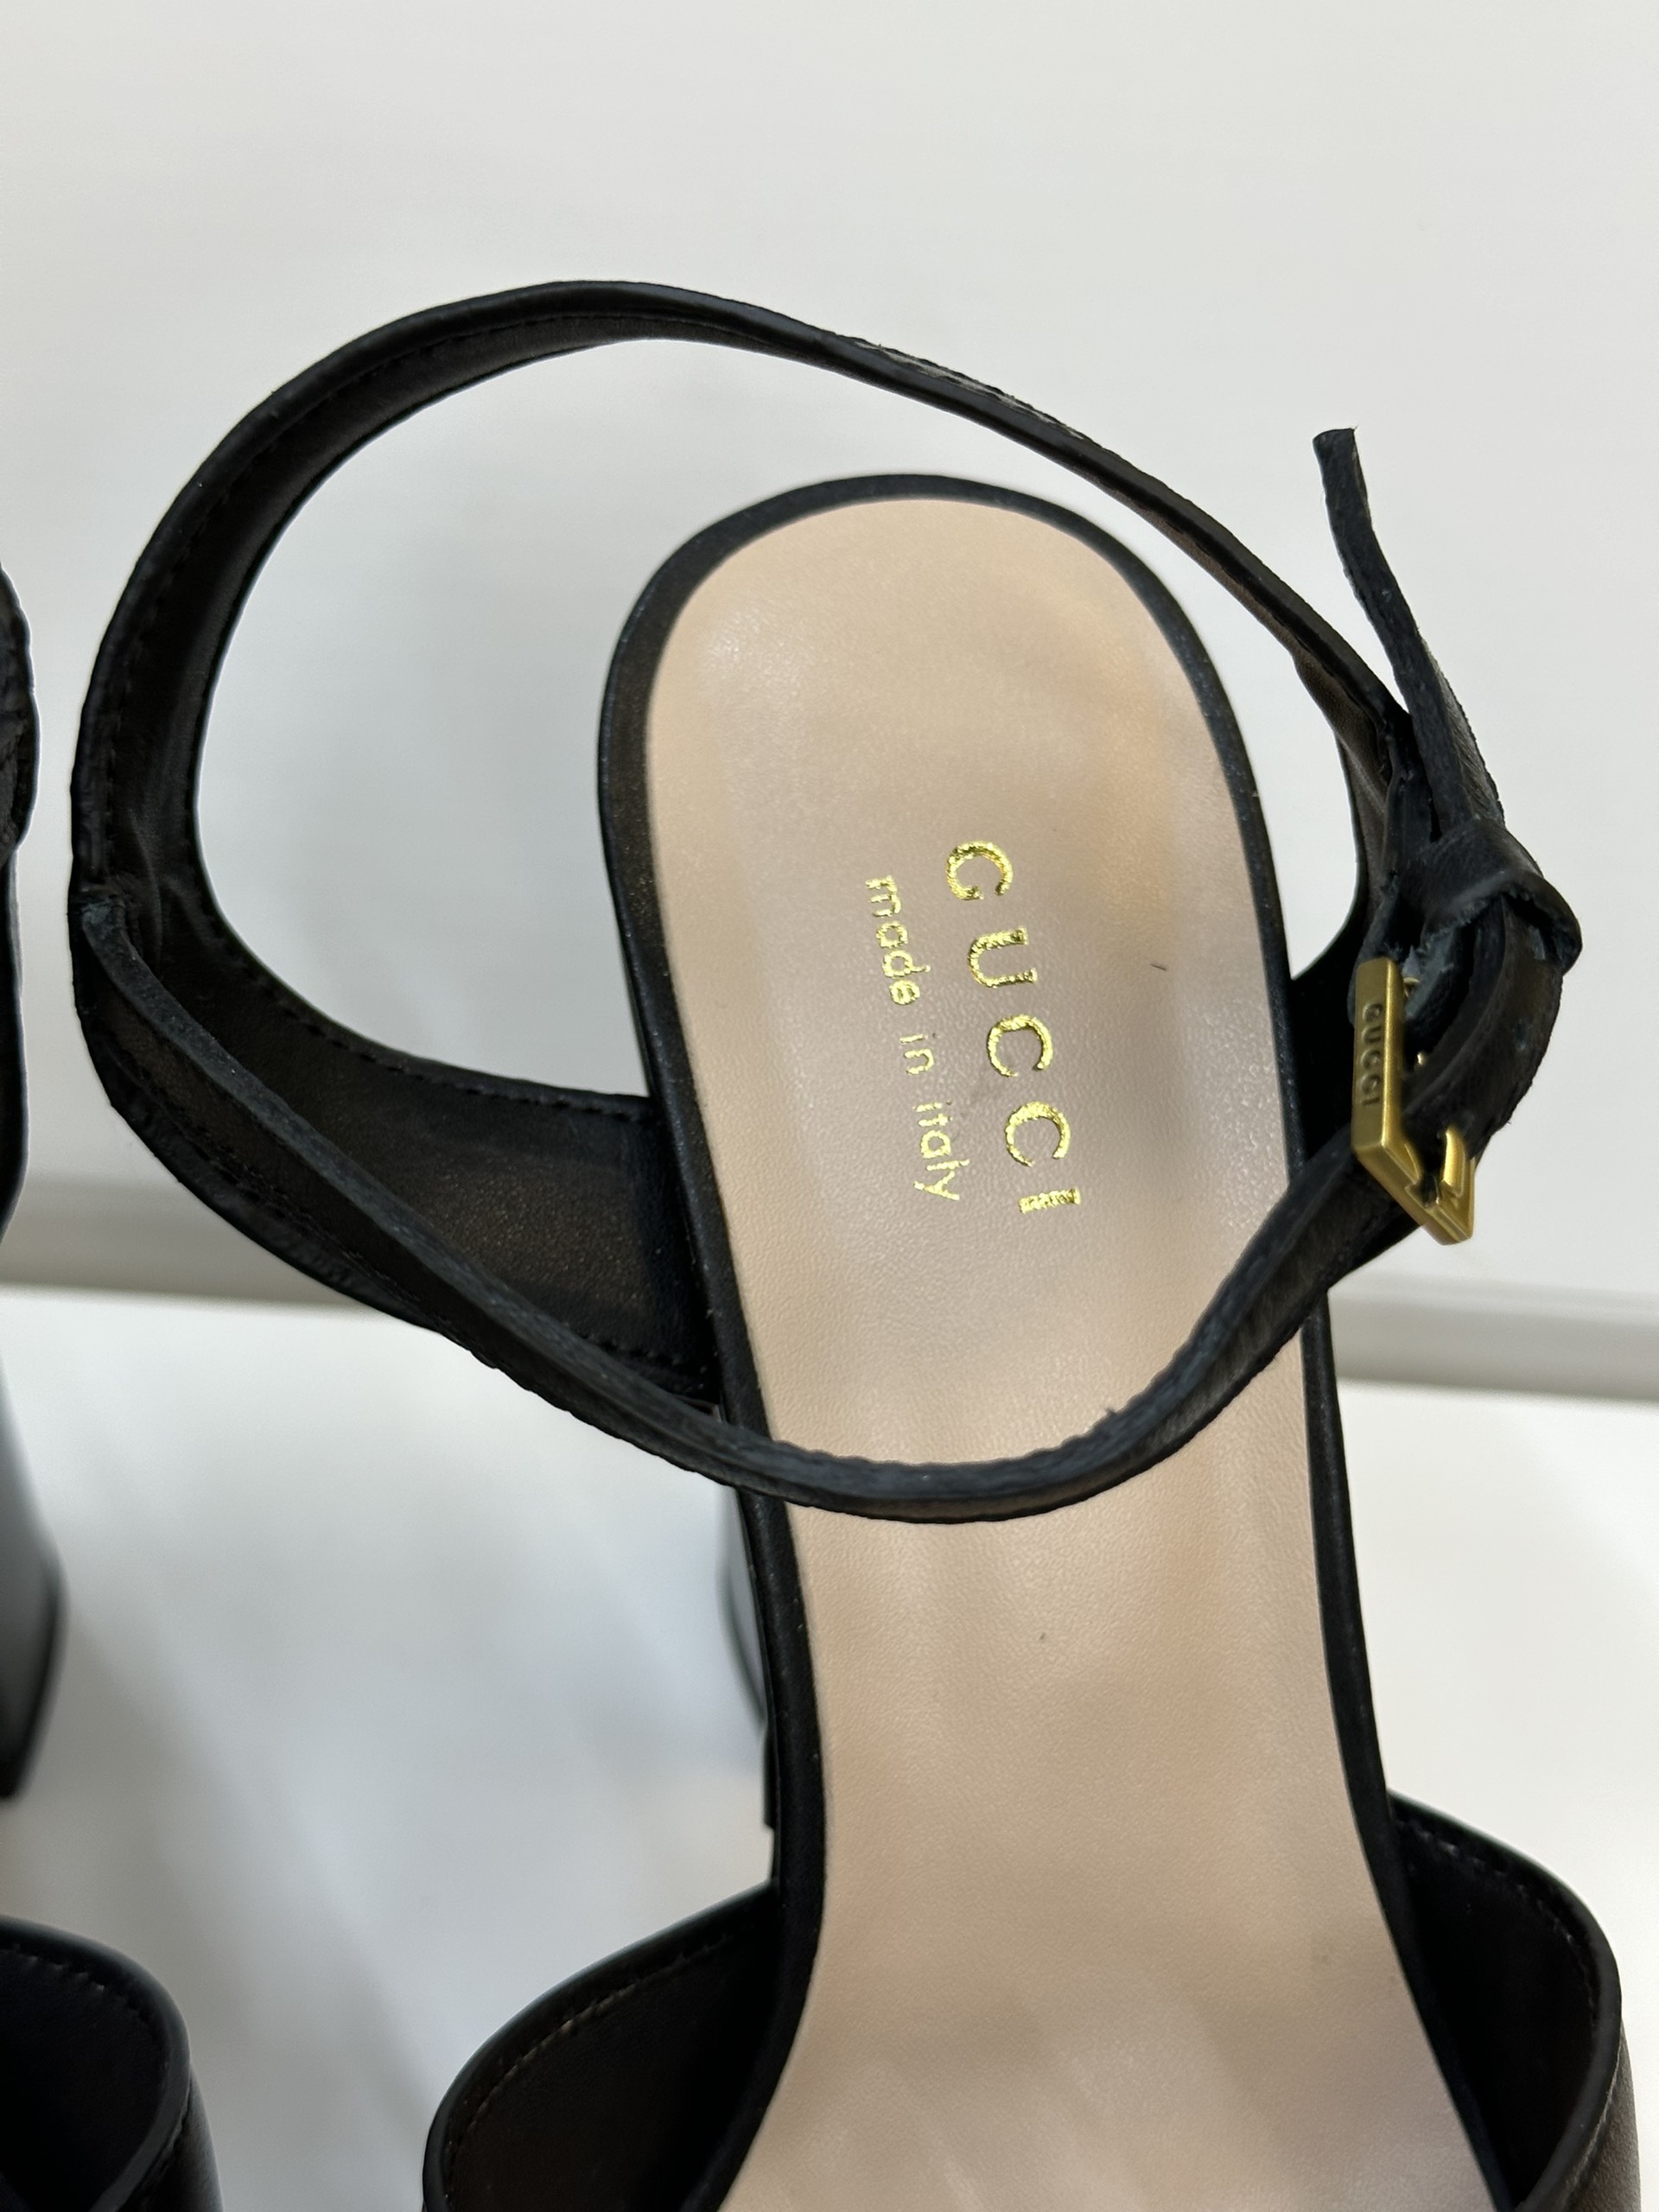 Giày Cao Gót Wondens Interlocking G Sandal Màu Đen Size 37cm 73002